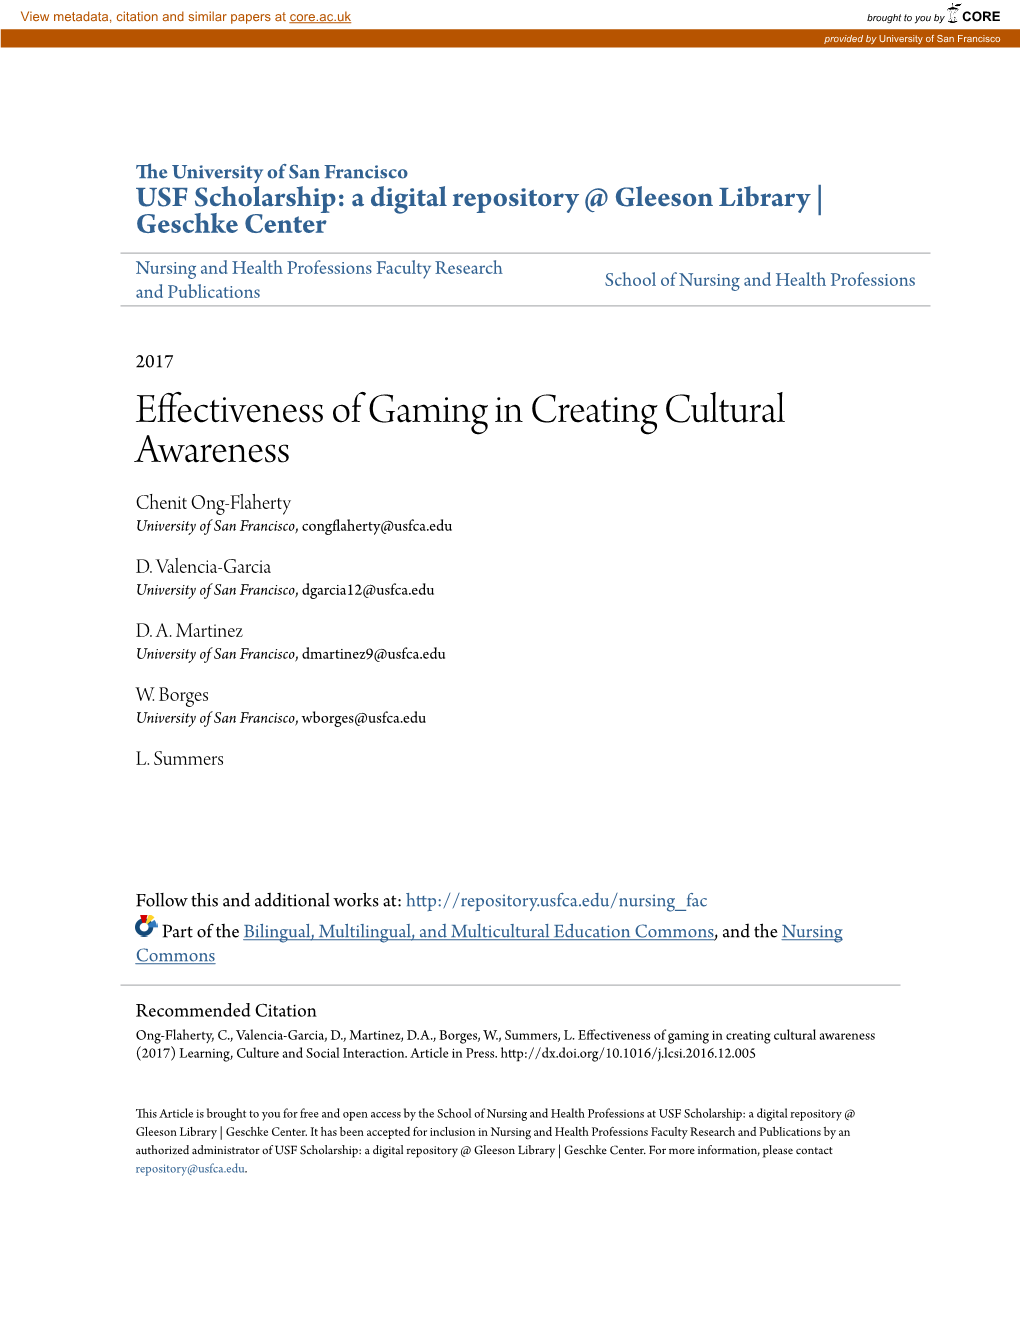 Effectiveness of Gaming in Creating Cultural Awareness Chenit Ong-Flaherty University of San Francisco, Congflaherty@Usfca.Edu